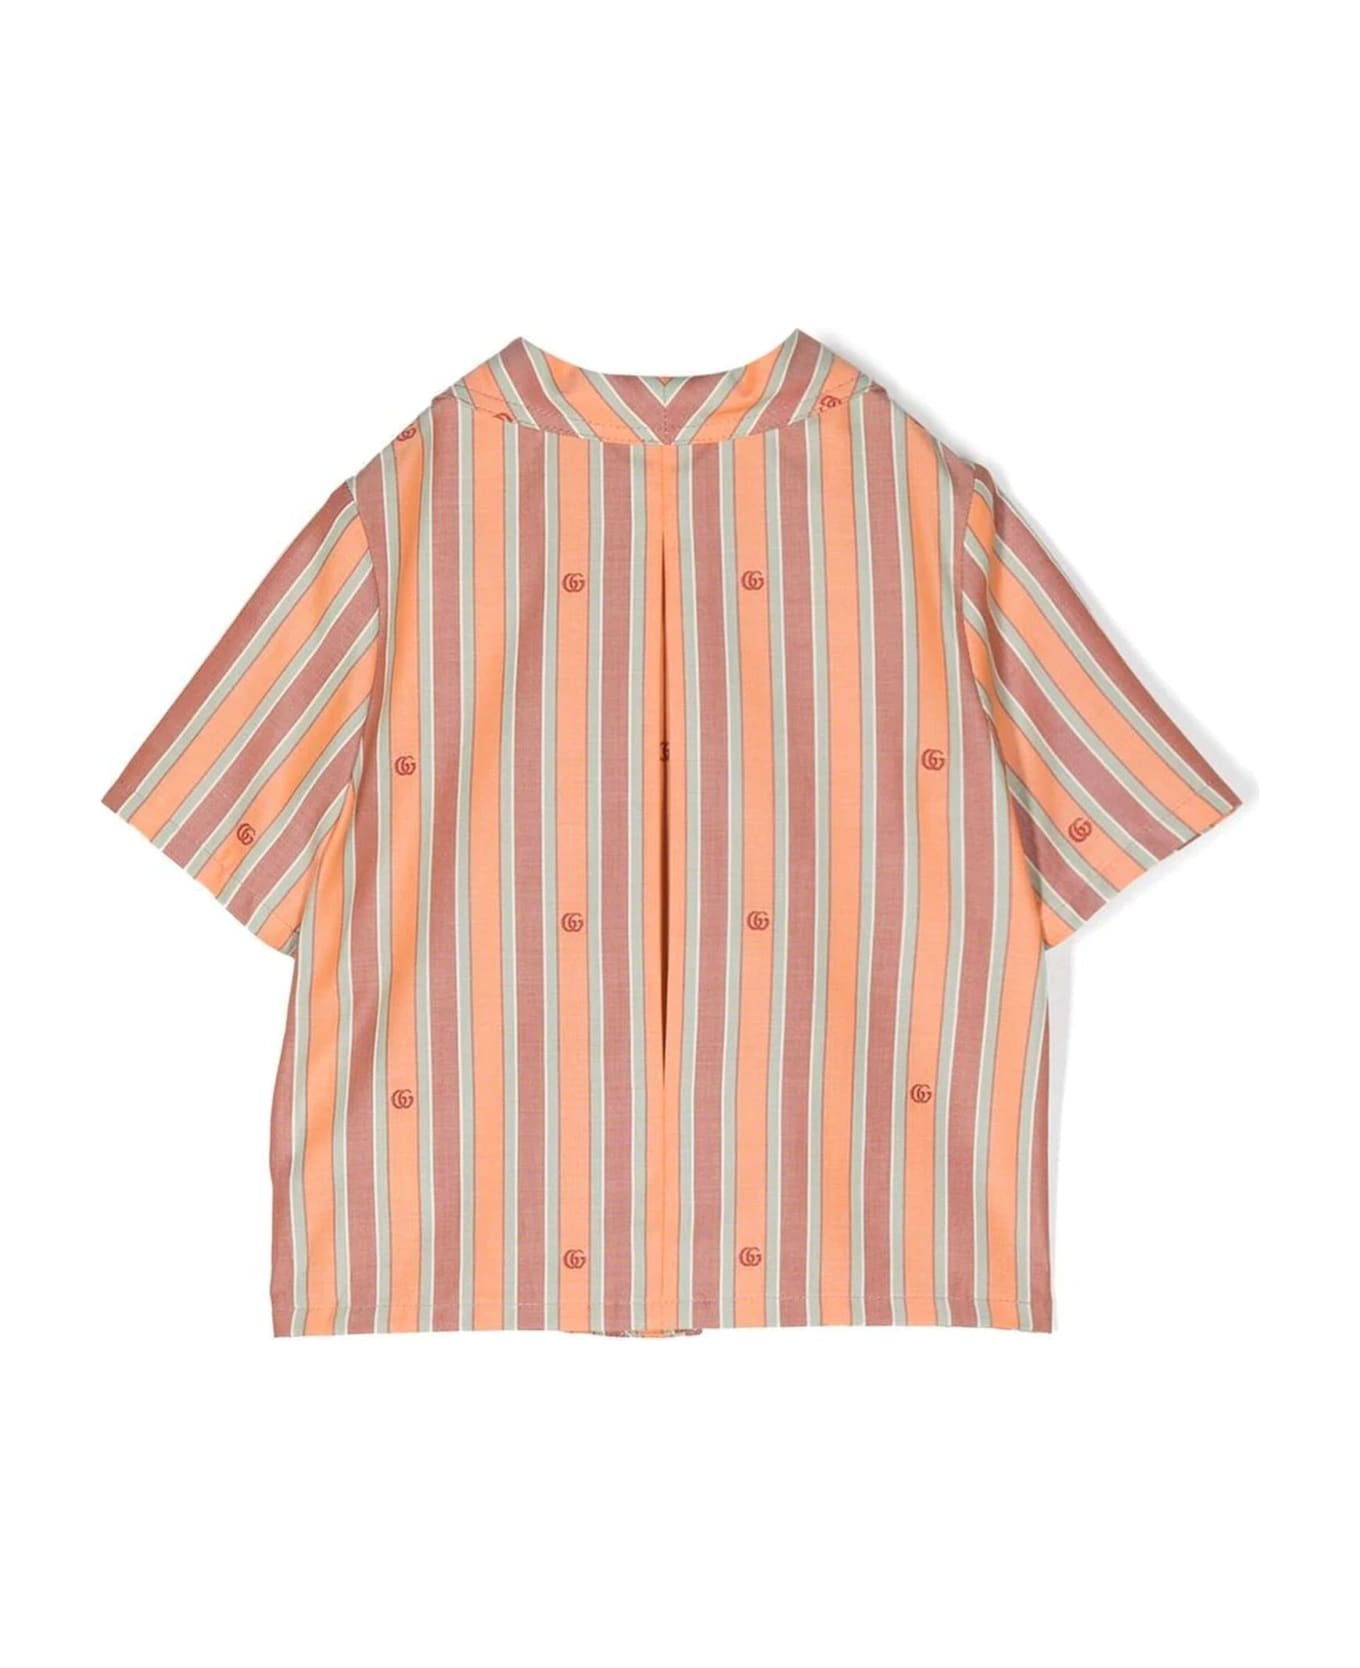 Gucci Kids Shirts Orange - Orange